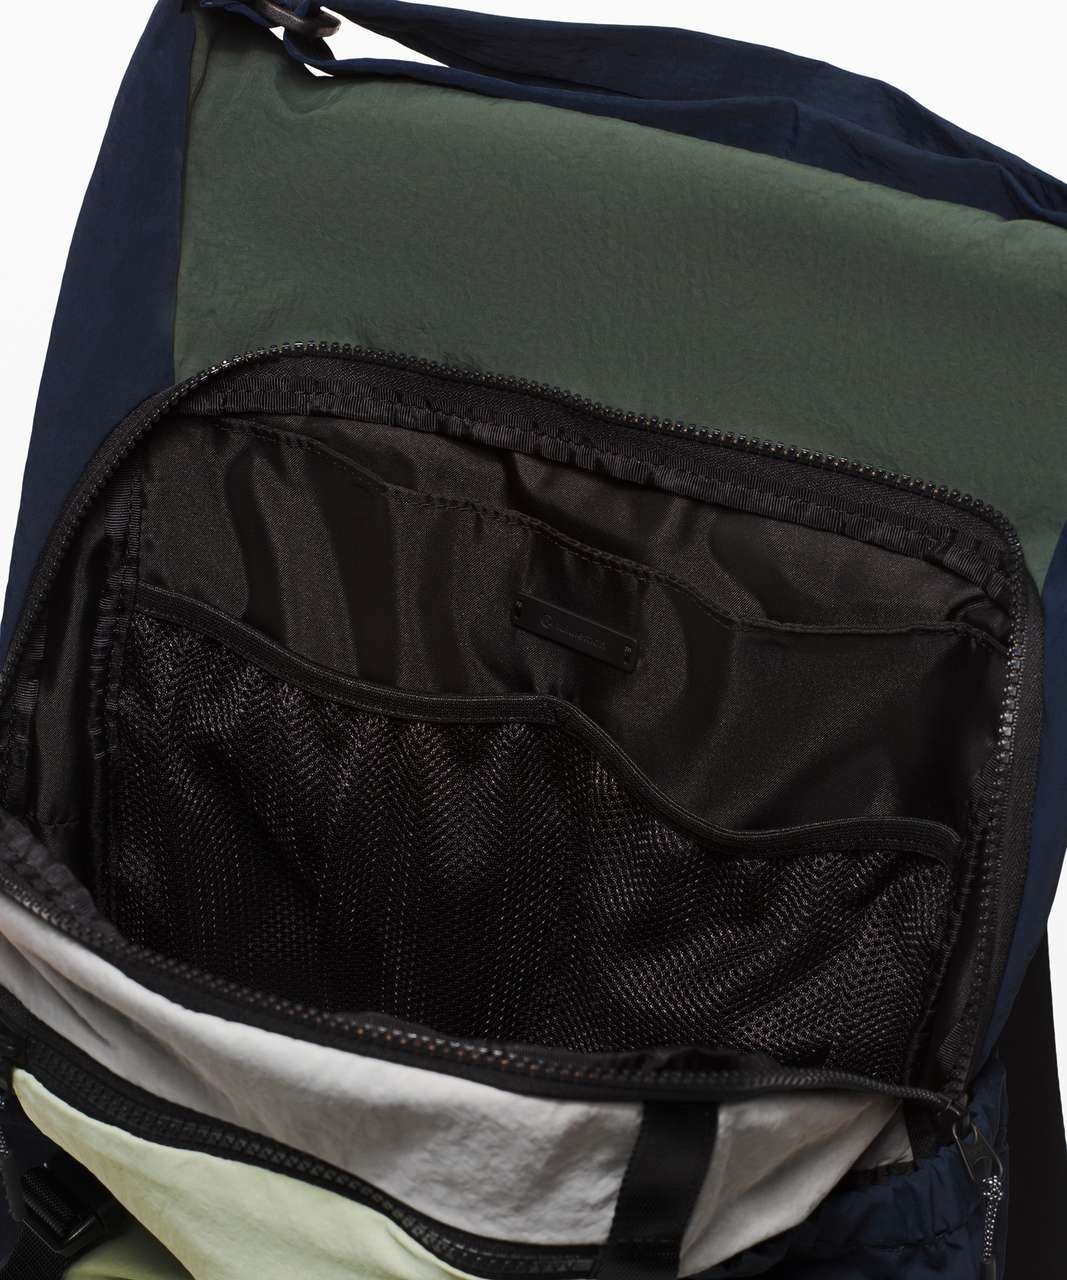 Lululemon Pack and Go Backpack - Green Fern / True Navy / Silver